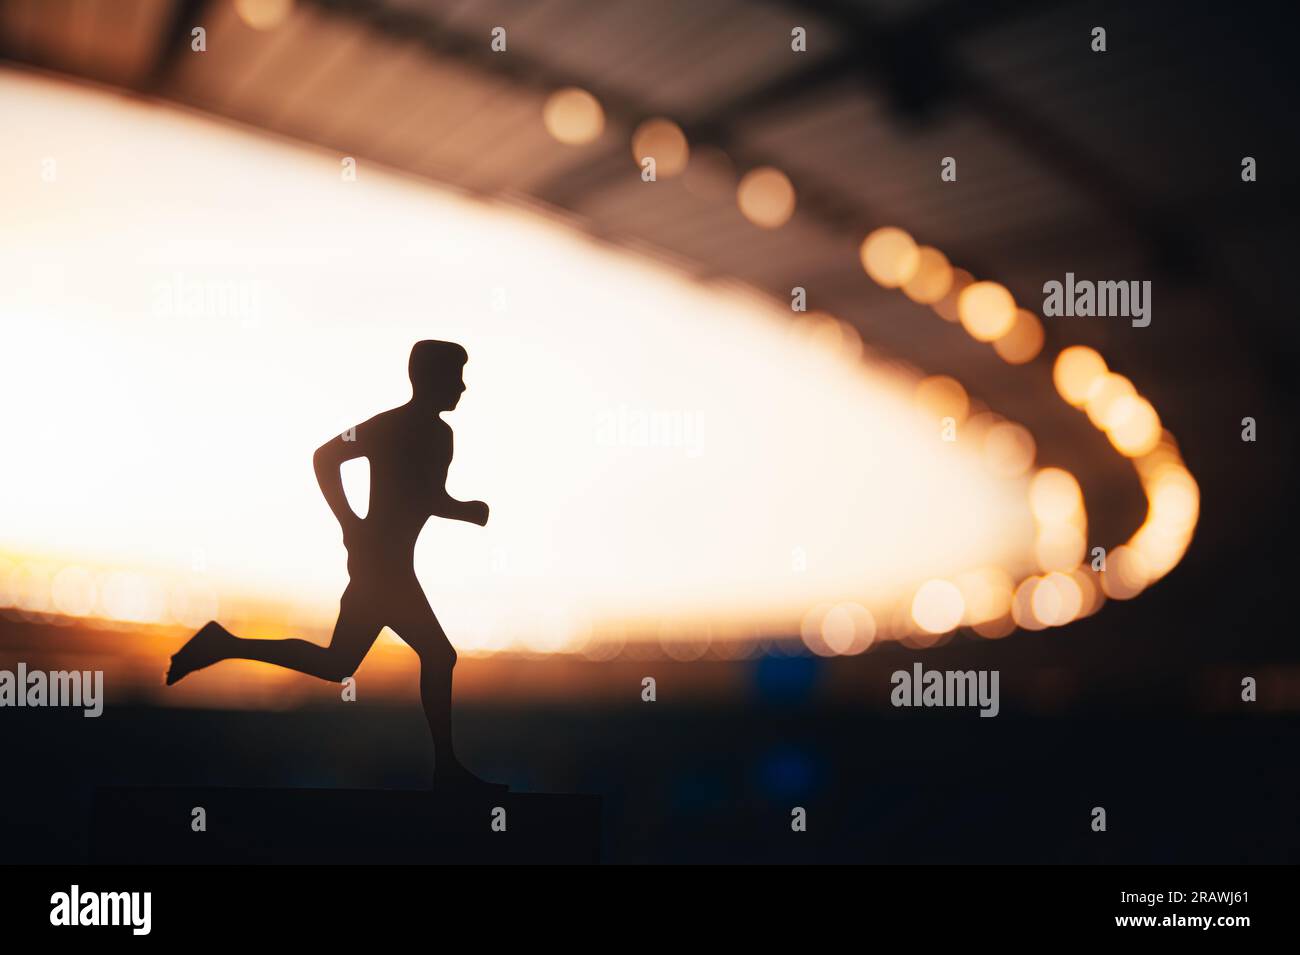 Silueta de un atleta masculino, un corredor de larga distancia, contra el telón de fondo bellamente iluminado de un estadio deportivo moderno Foto de stock